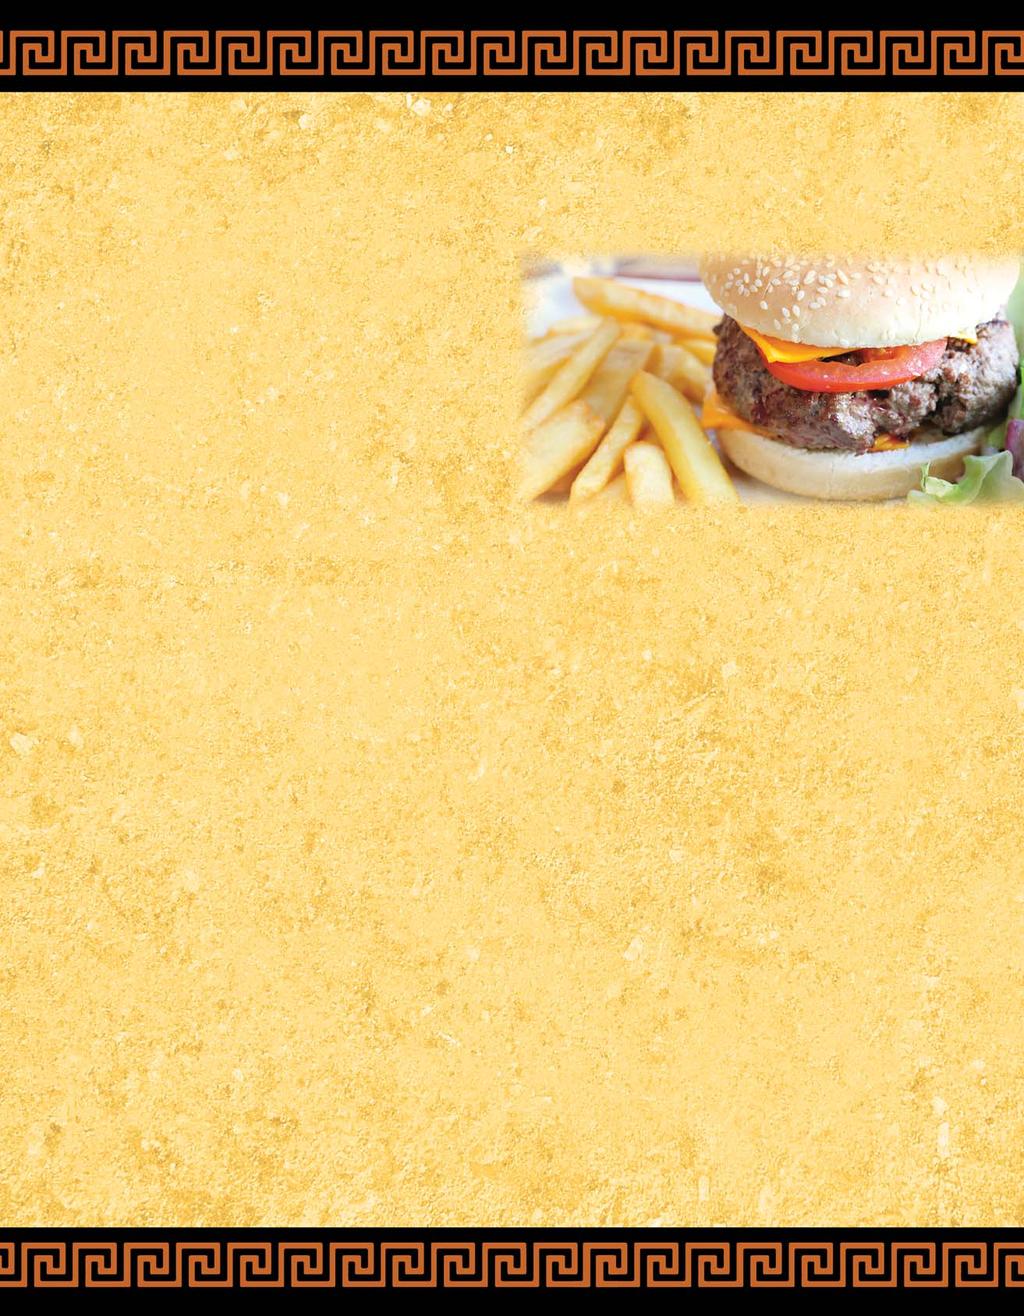 CHUCKWAGON ON A BUN CHICKEN SALAD SANDWICH TURKEY SANDWICH VIRGINIA HAM SANDWICH Paul s Tasty Sandwiches 3.